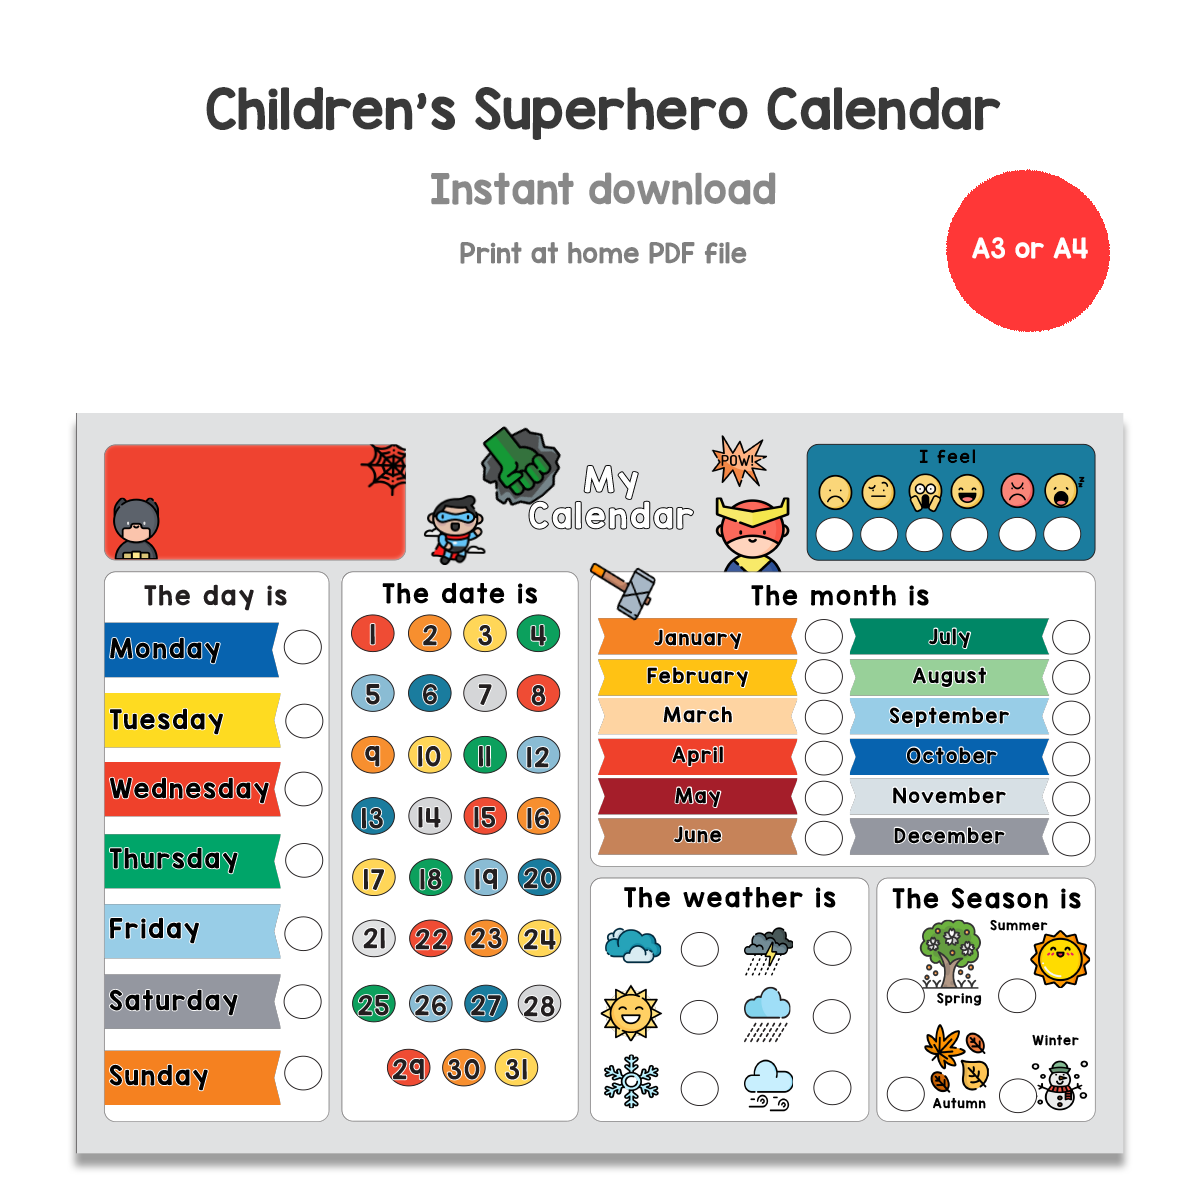 Children's Superhero Calendar